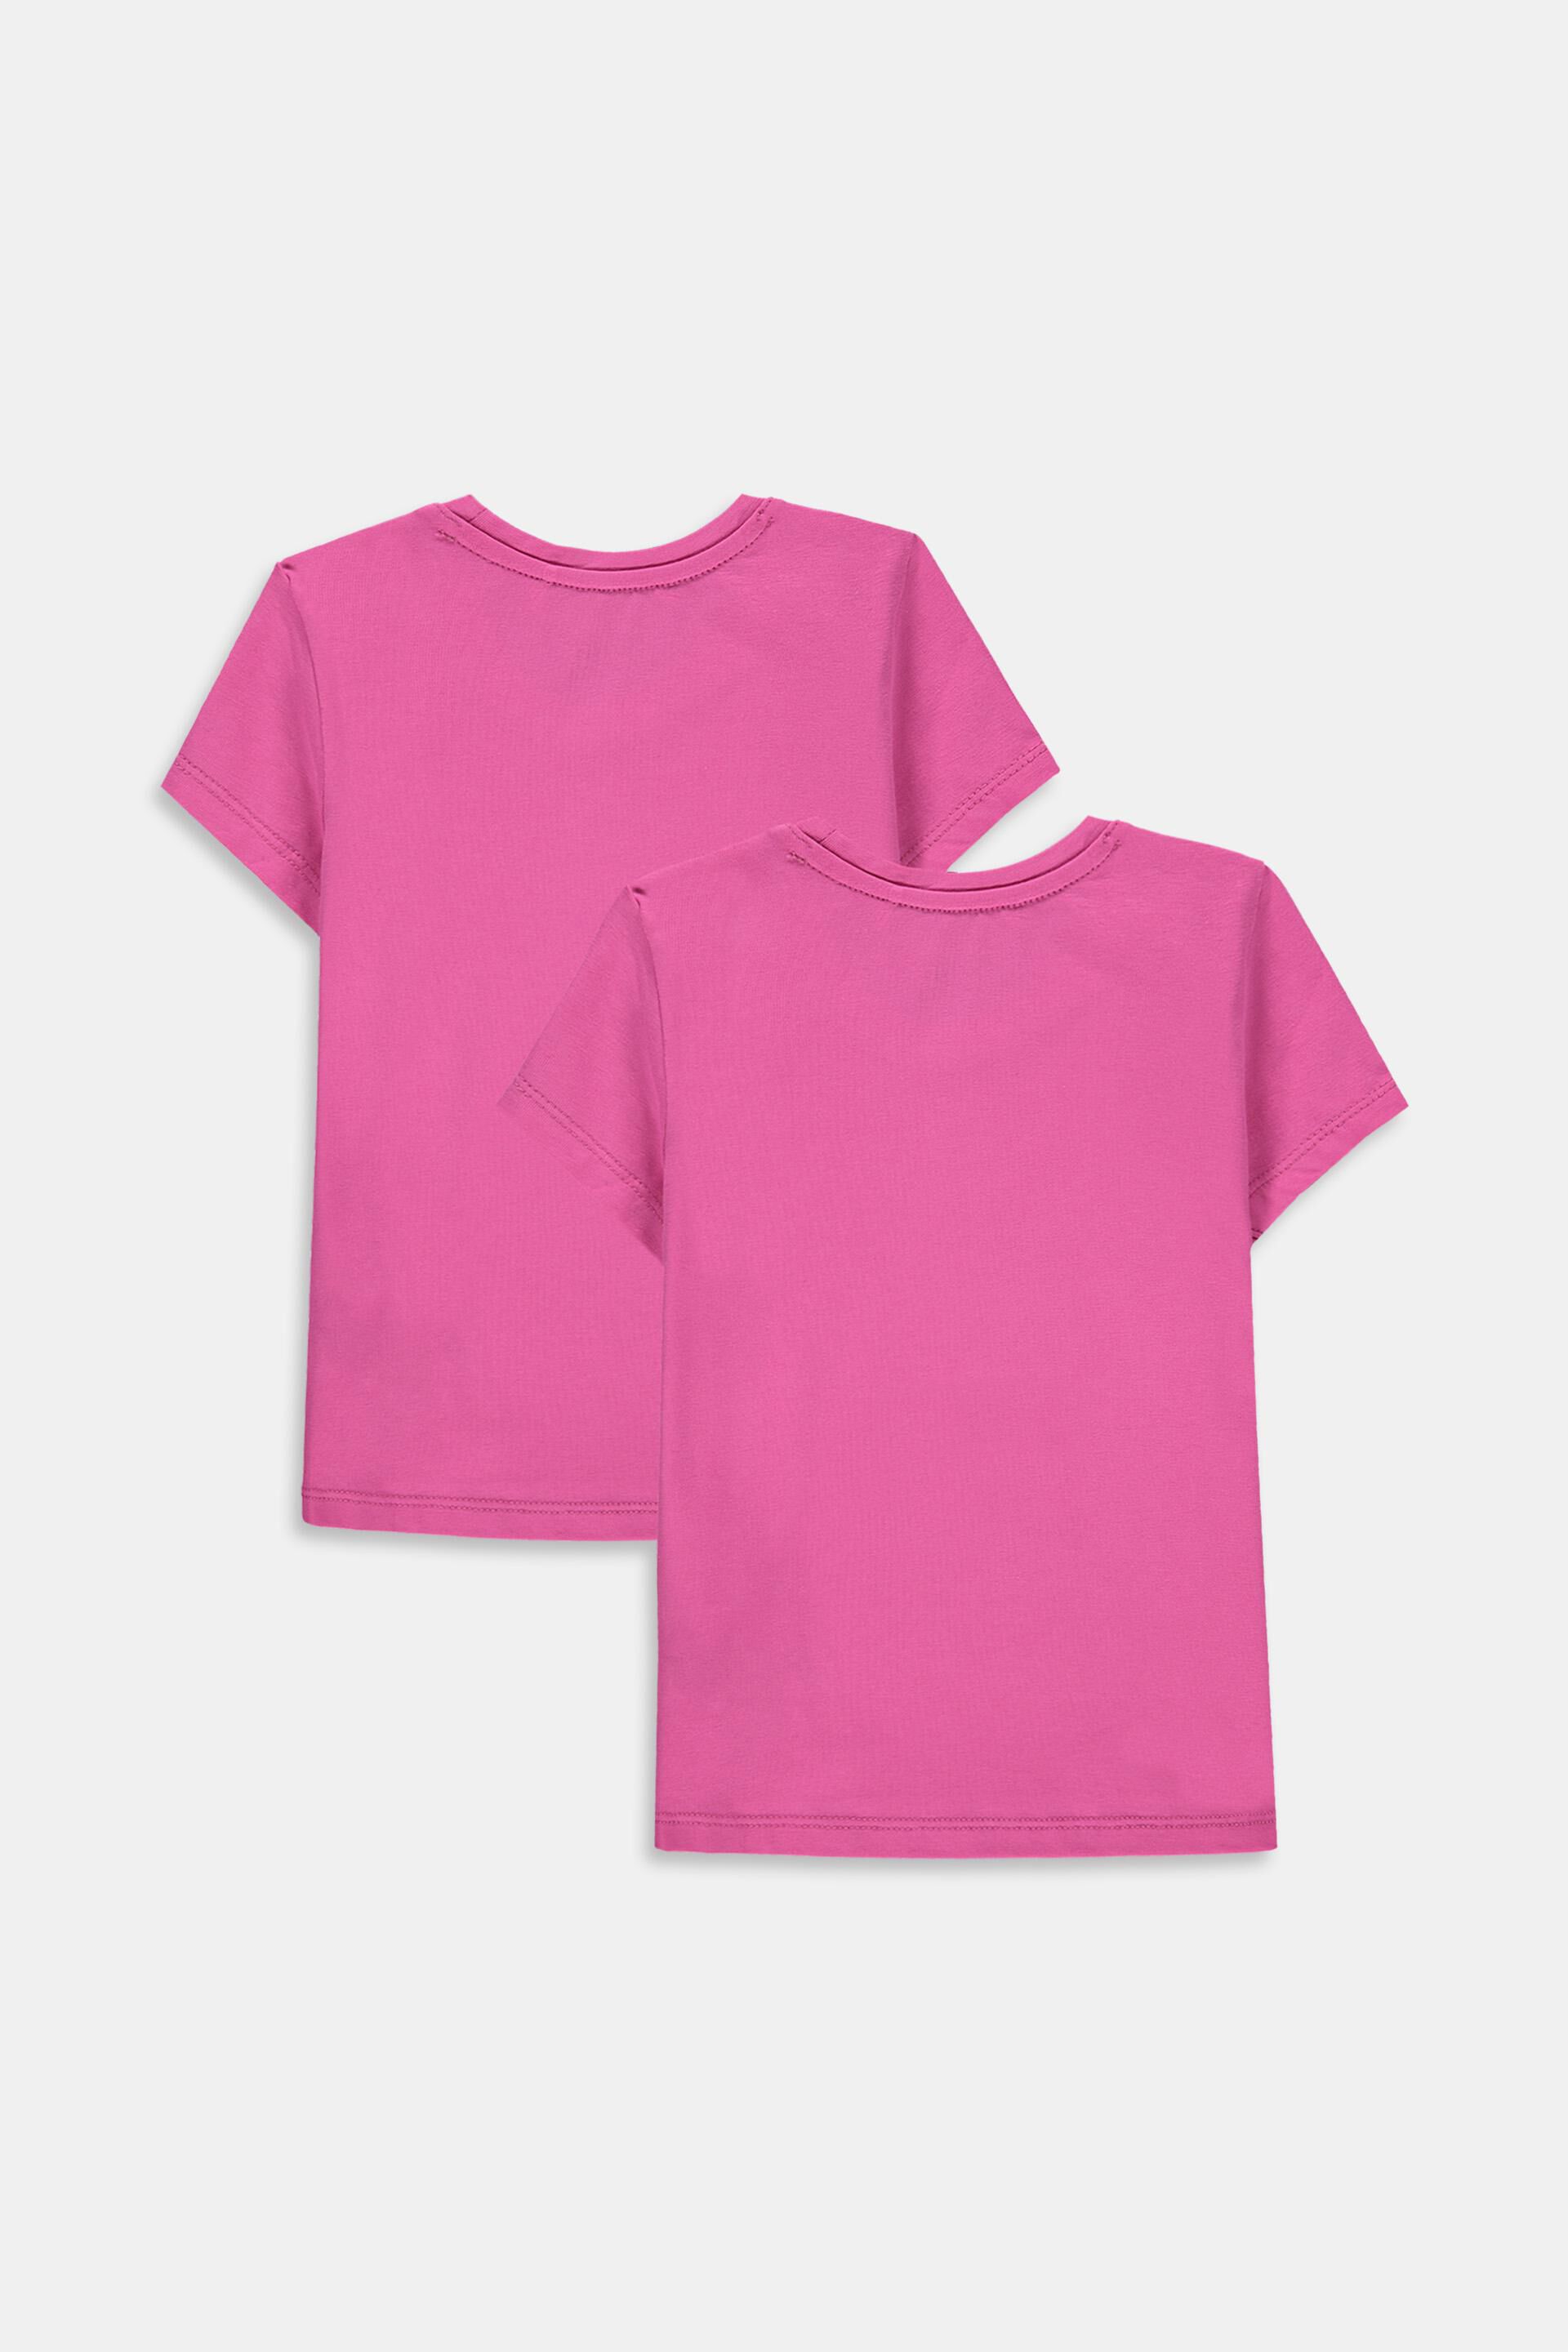 ESPRIT T-Shirt SS Bambina 